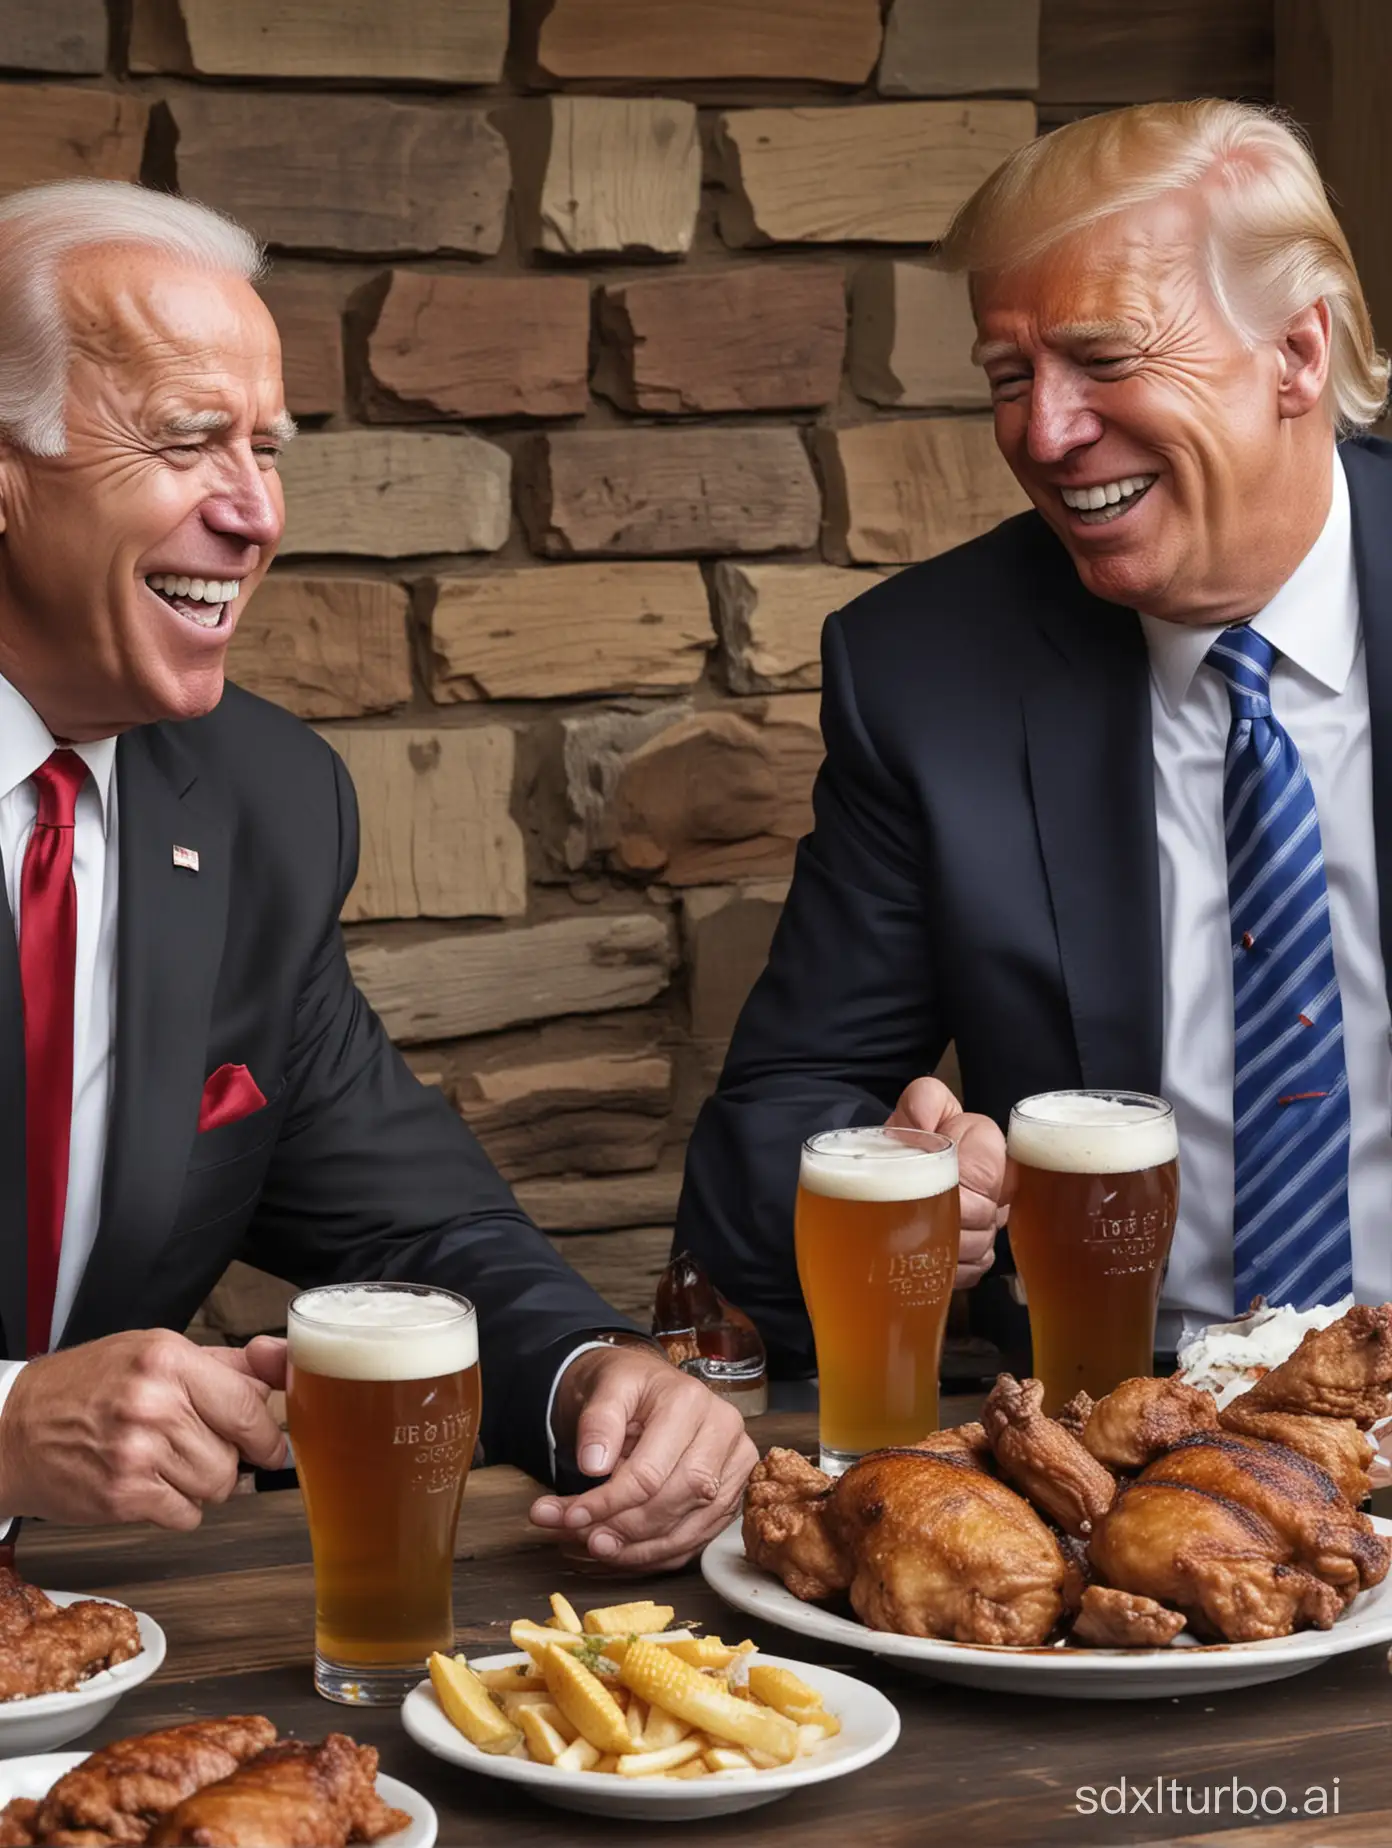 Presidential-Laughter-Joe-Biden-and-Donald-Trump-Enjoying-BBQ-Delights